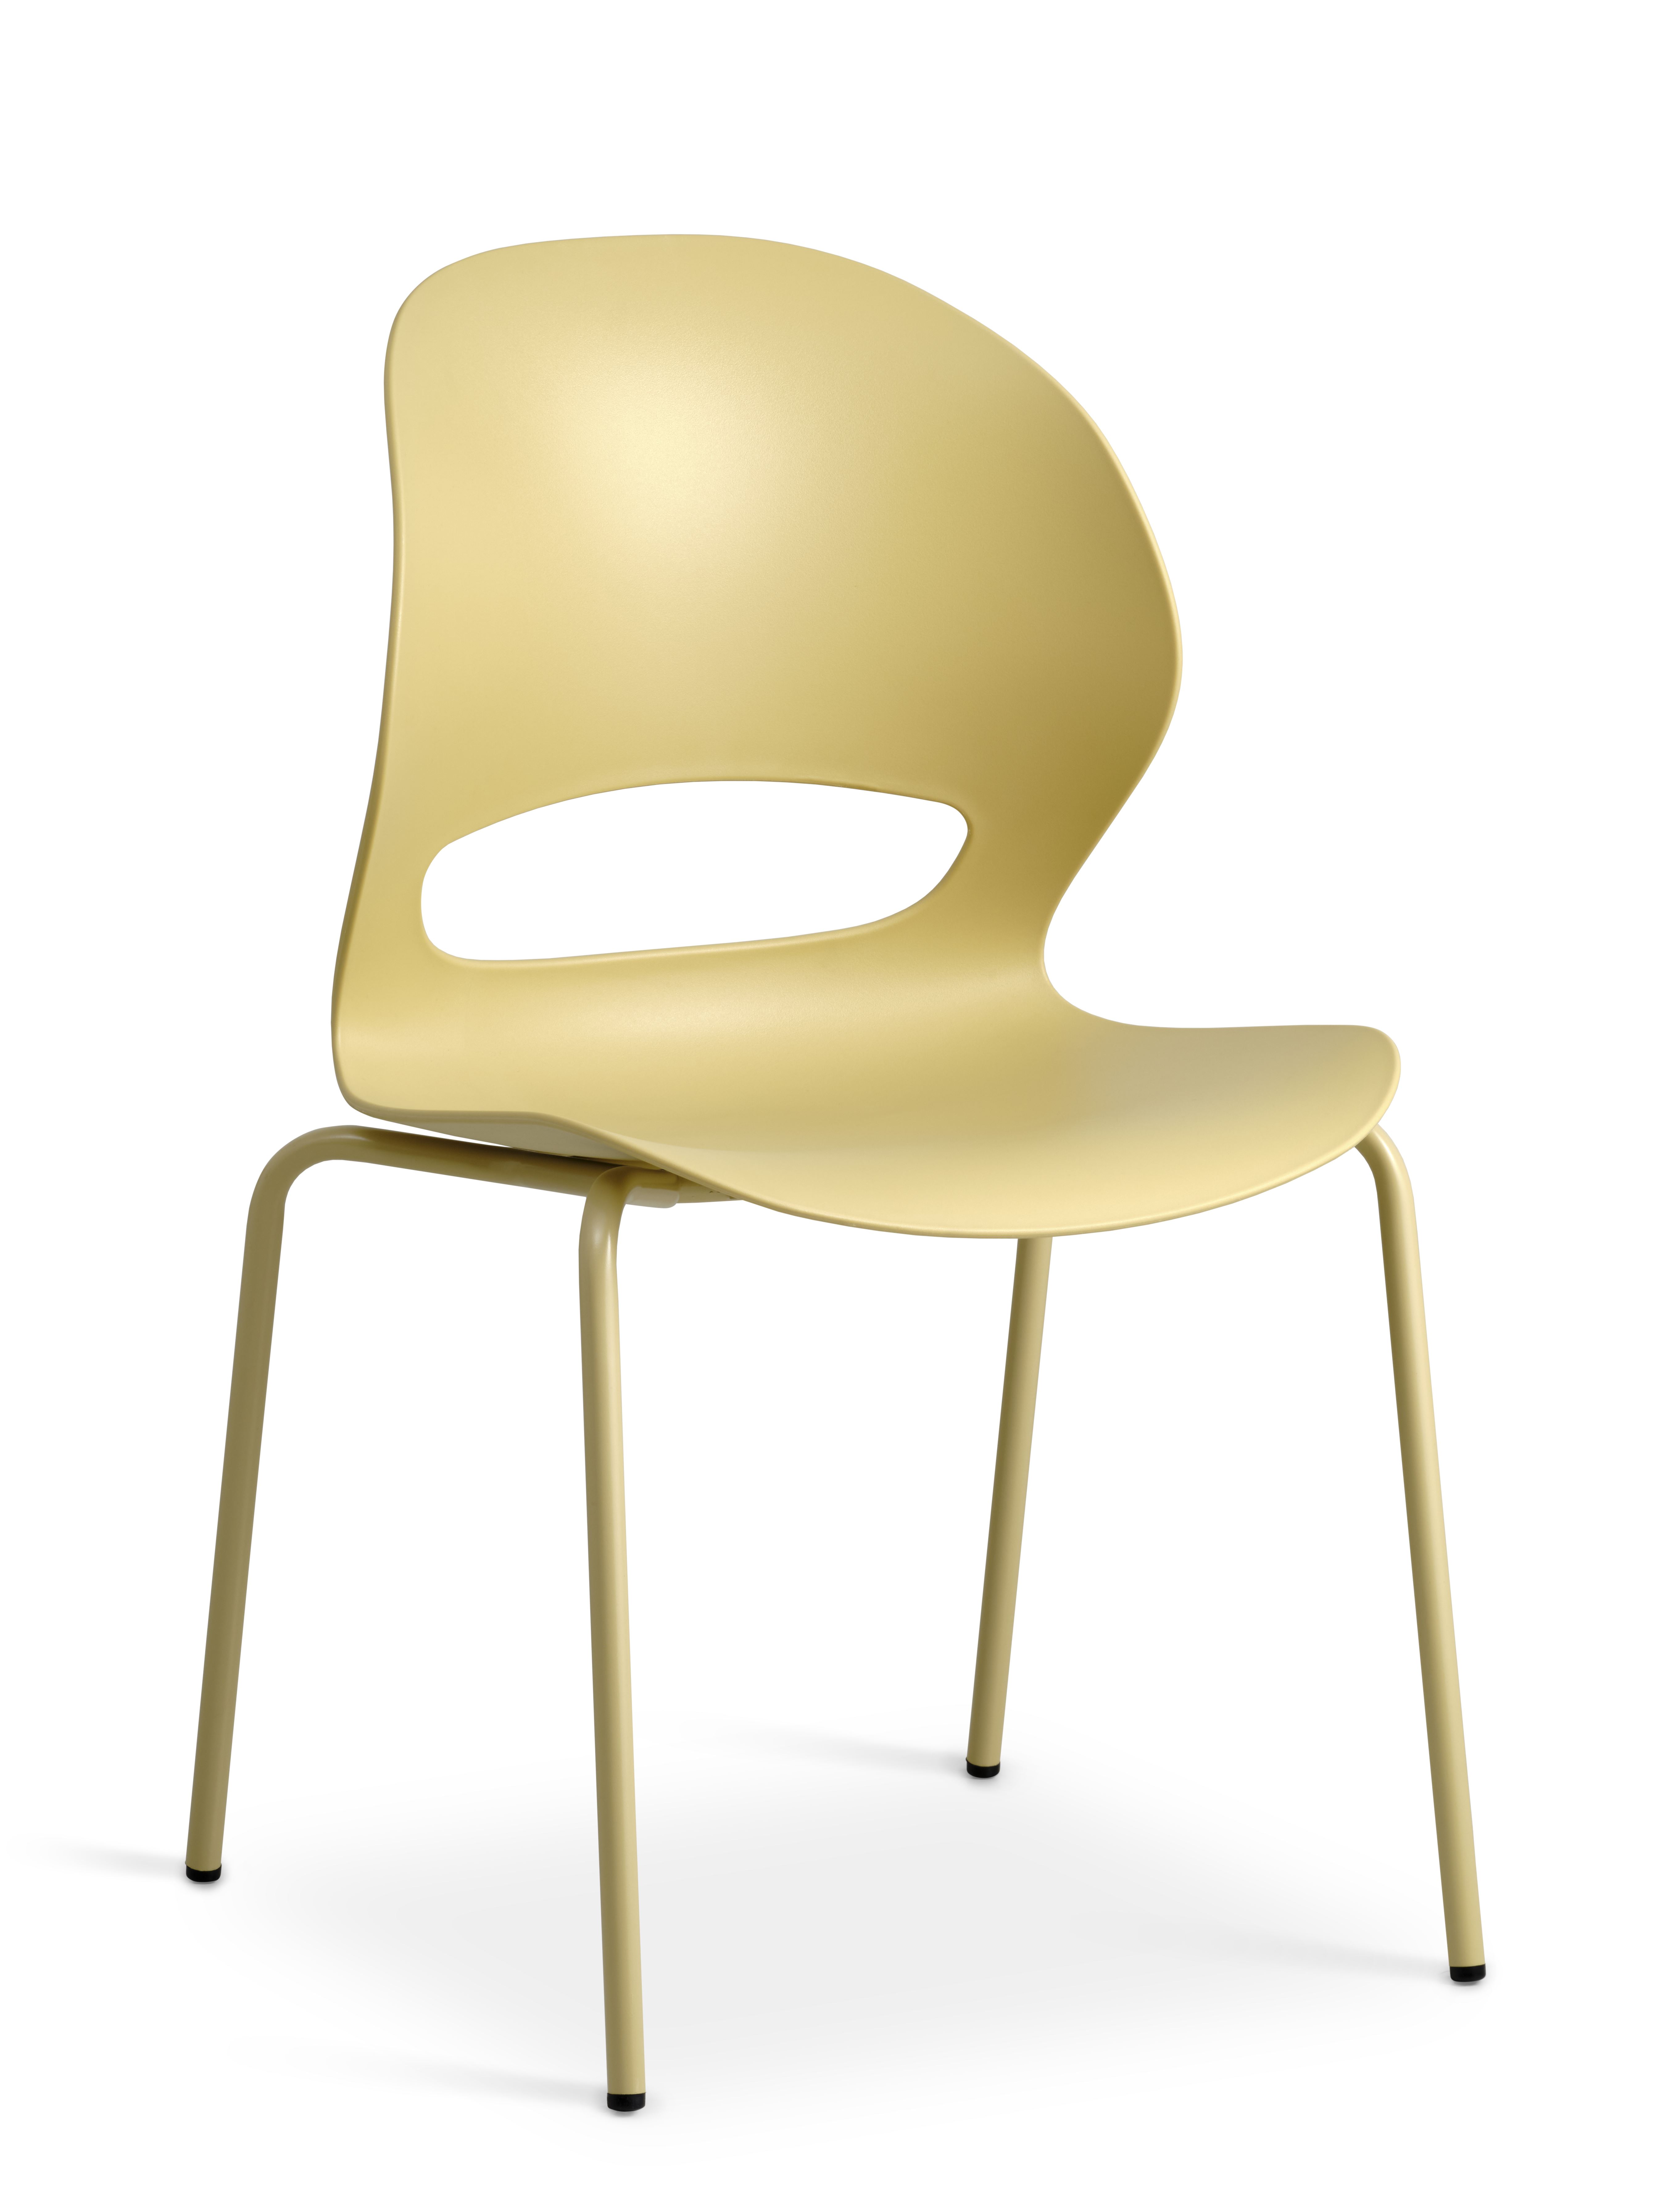 Linea spisebordsstol - sennepsgul PVC og sennepsgul metal